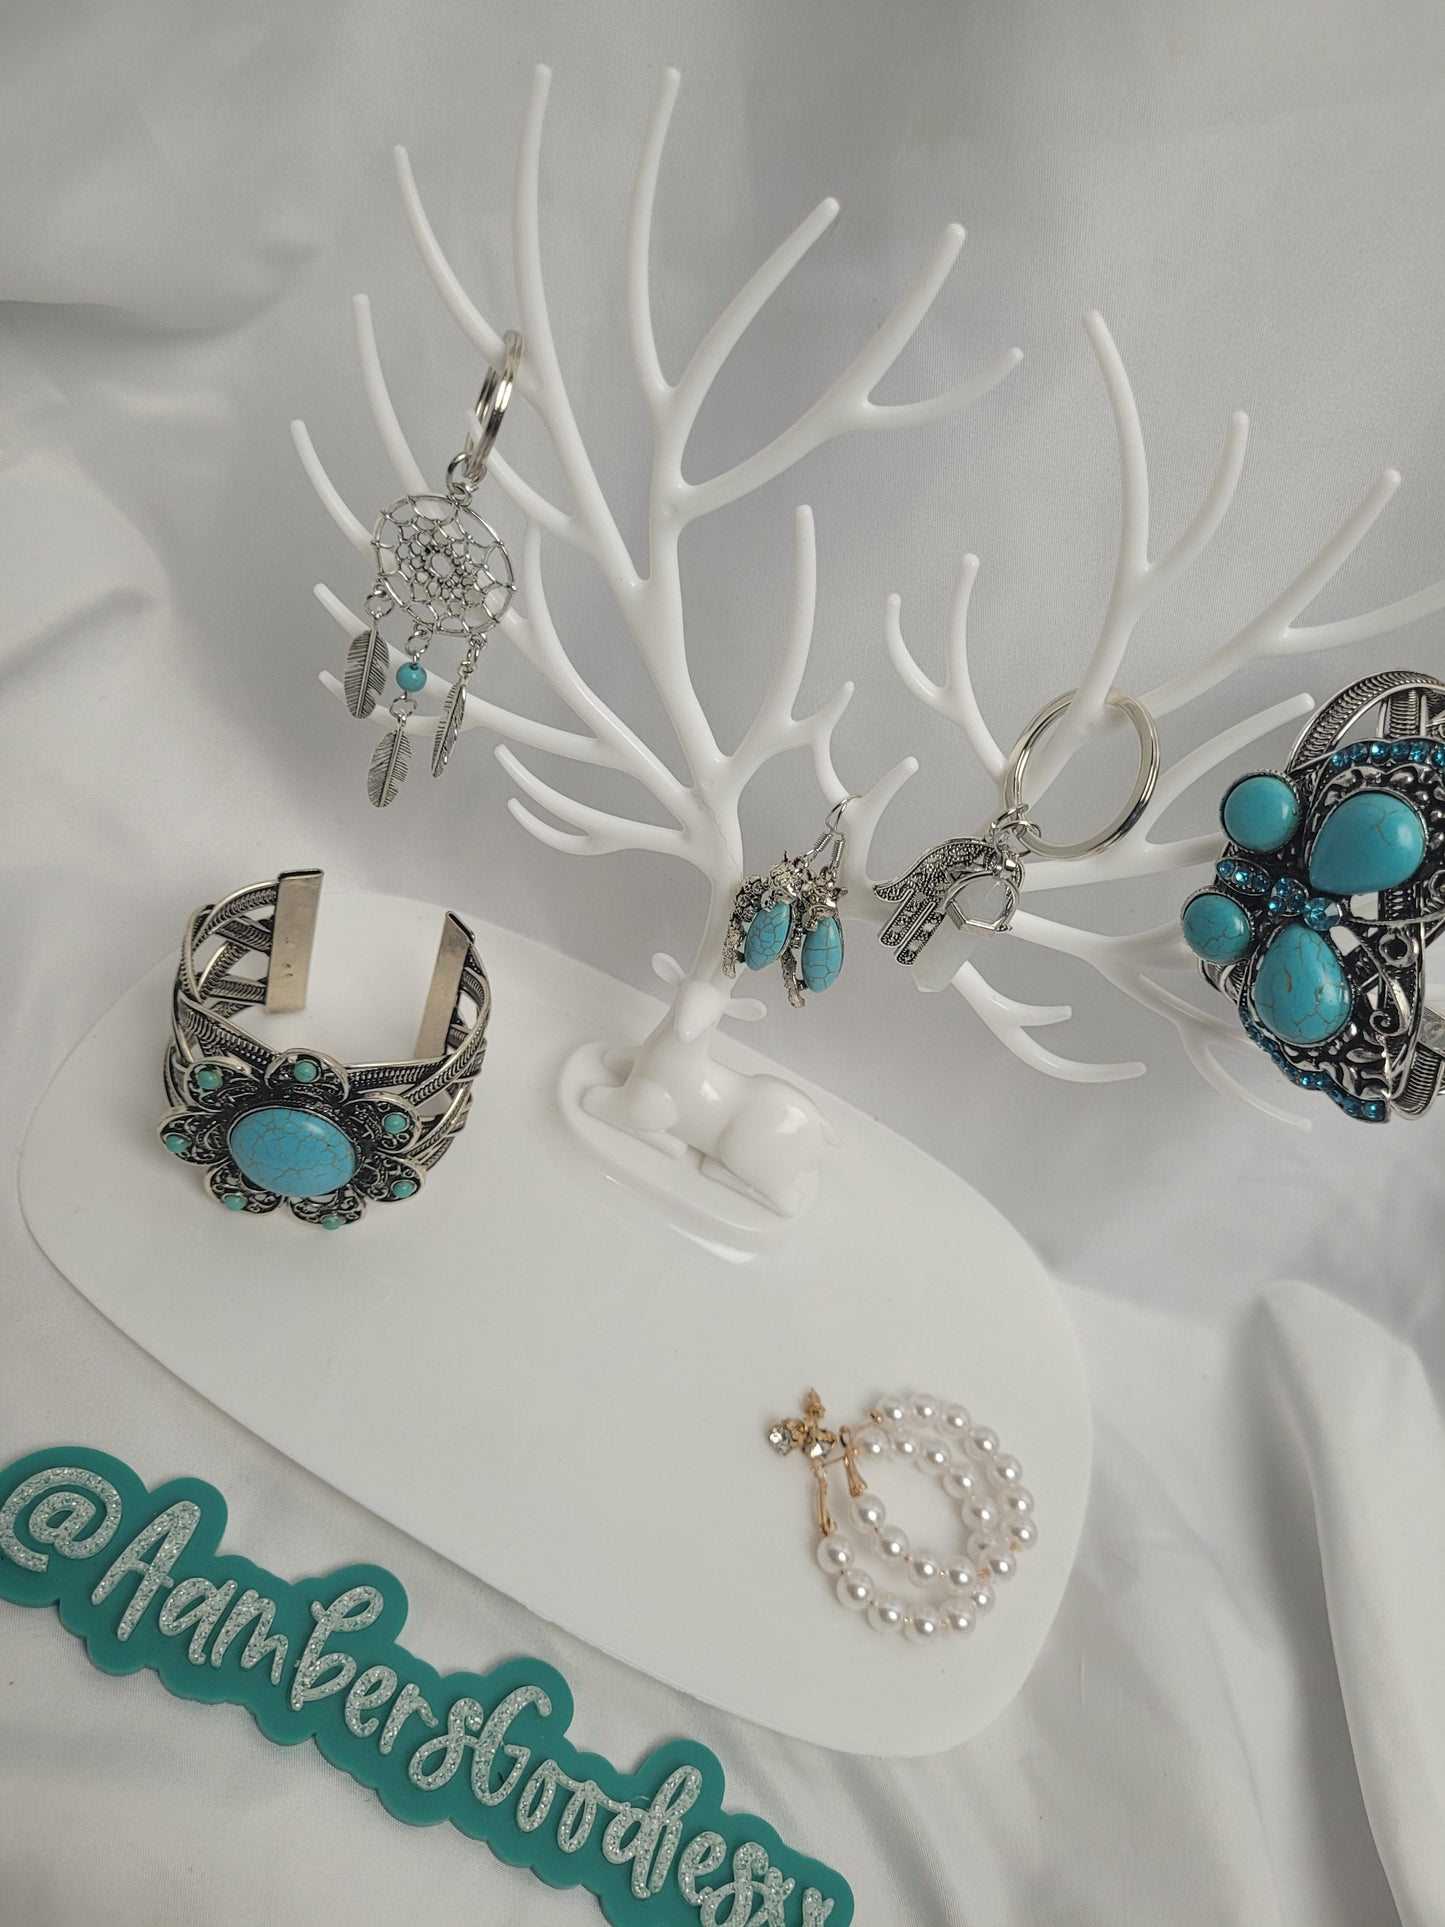 White Deer jewelry tray Holder Aambers Goodies xx 